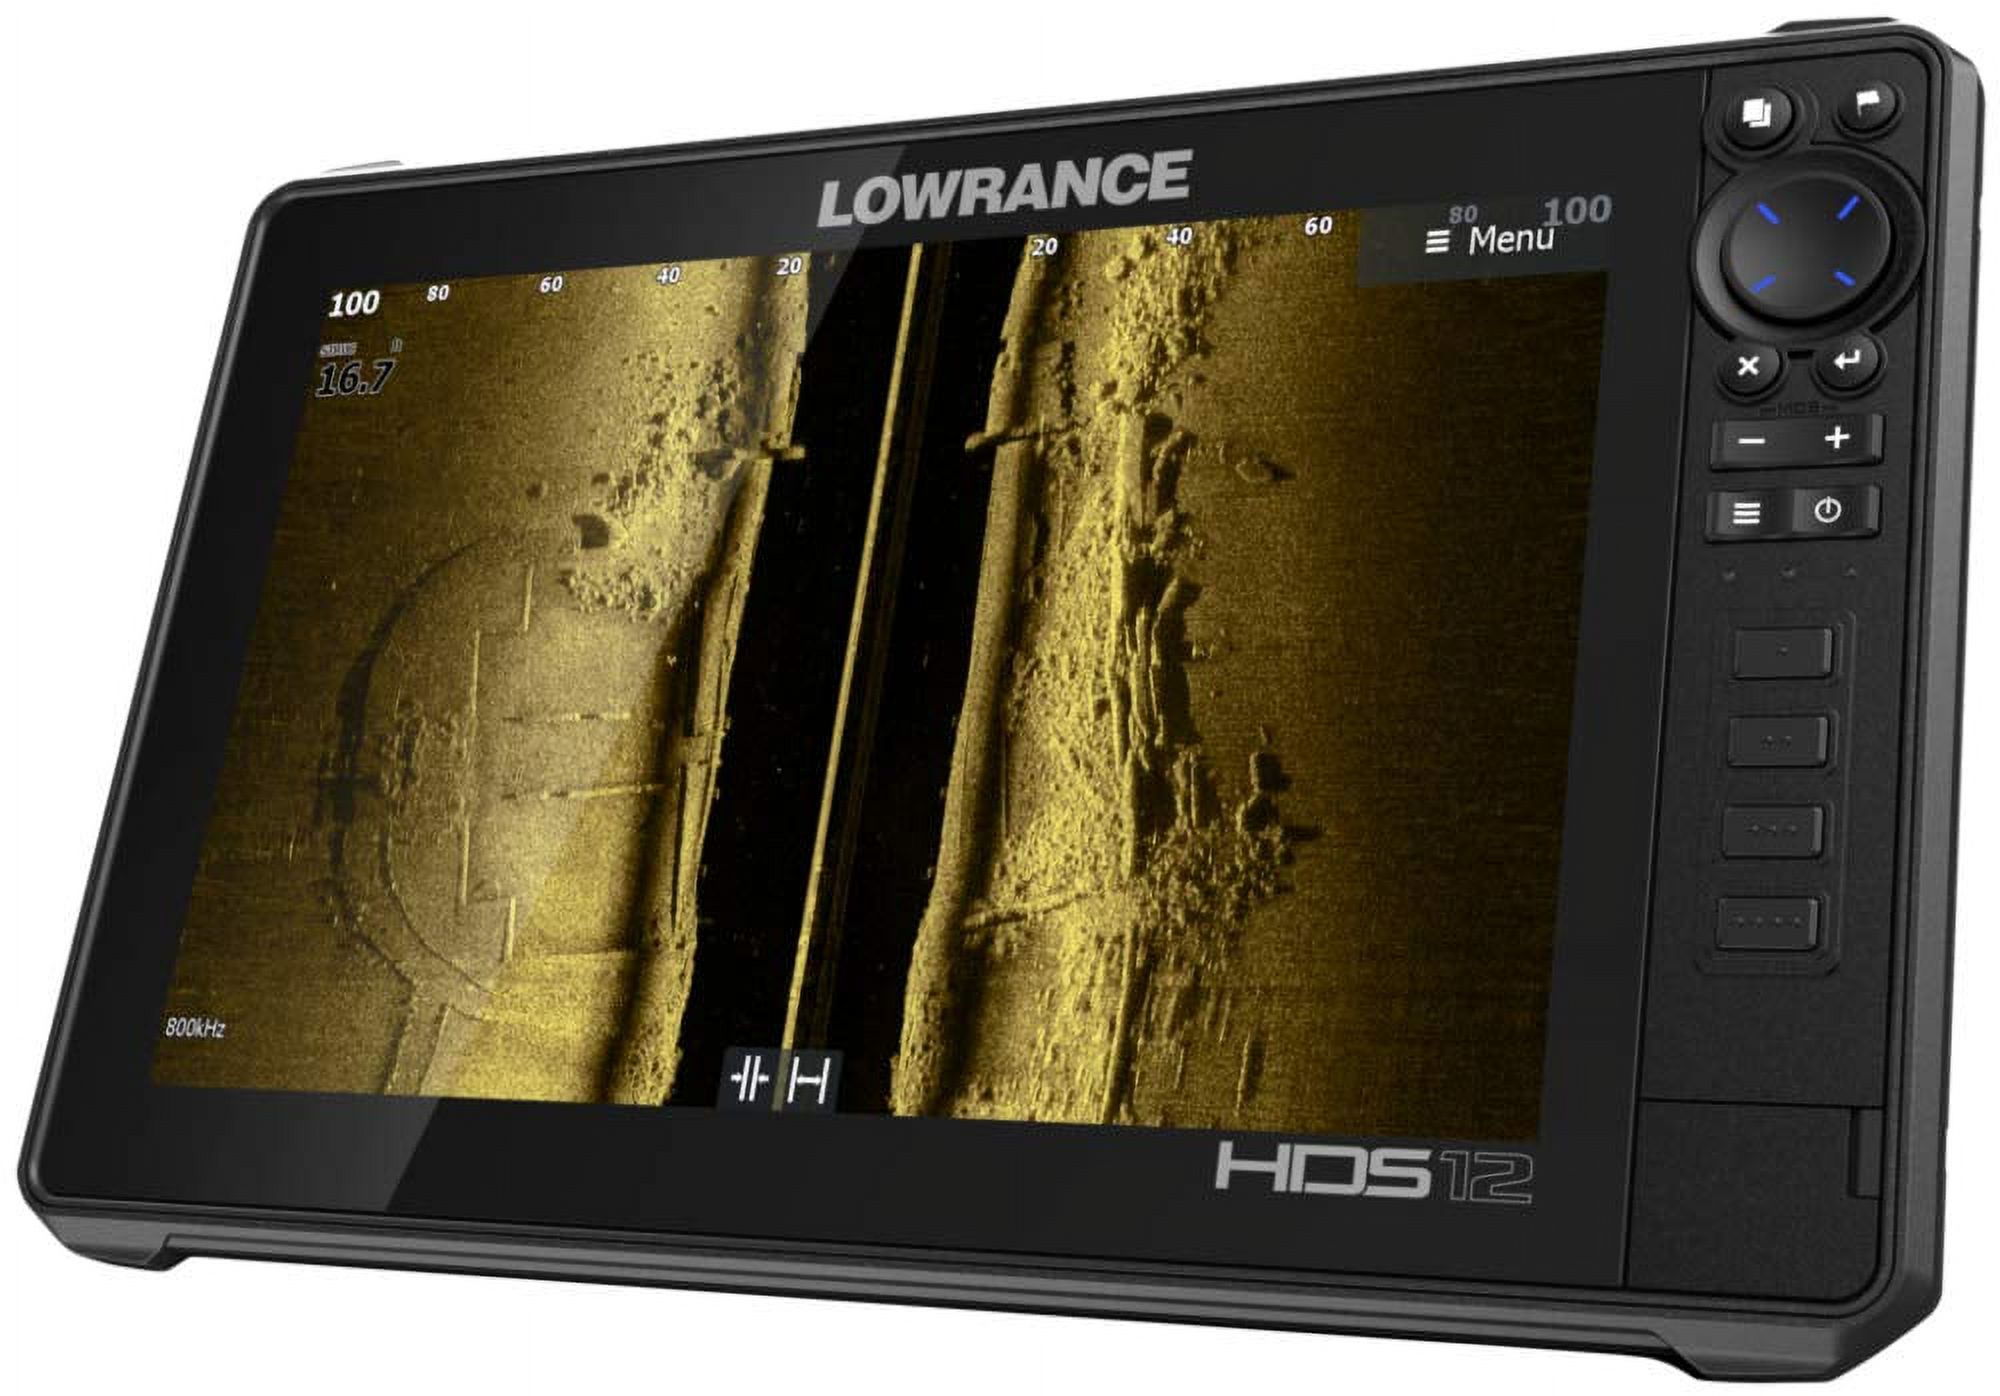 HDS-12 Live - 12-inch Fish Finder No Transducer Model is Compatible StructureScan 3D Active Imaging Sonar. Smartphone Integration. Preloaded C-MAP US Enhanced Mapping - image 2 of 2